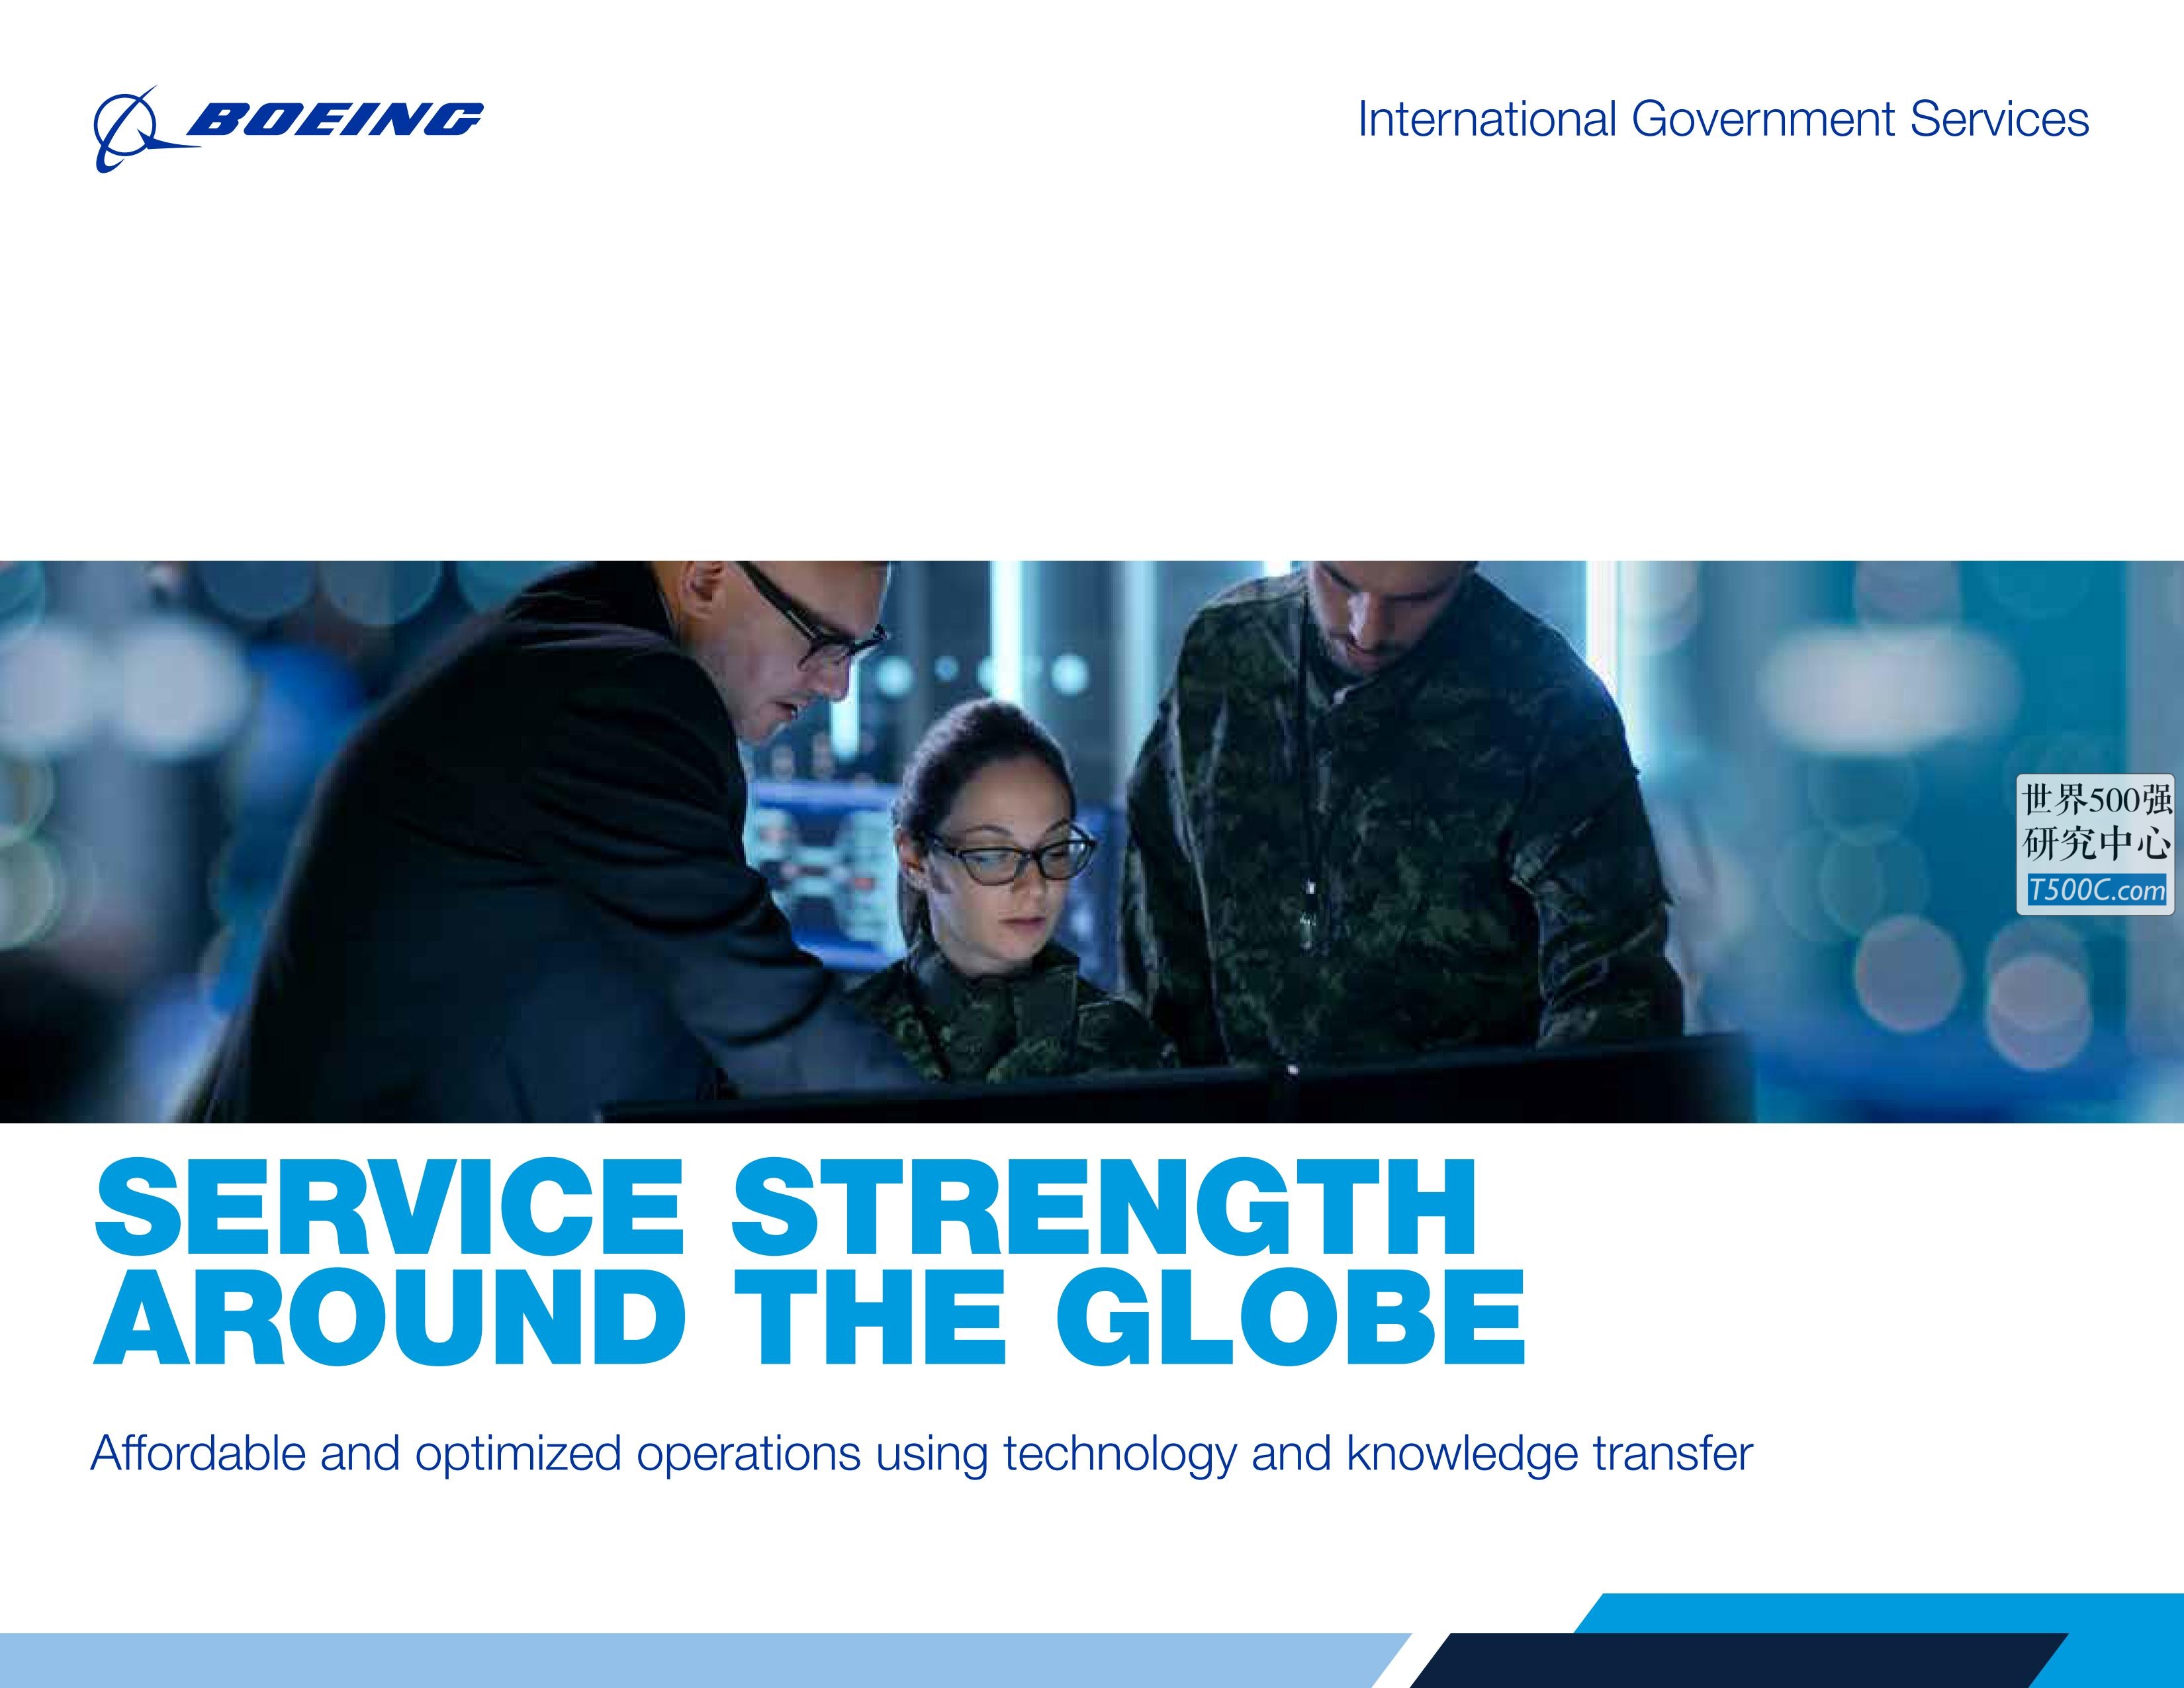 波音Boeing_公司宣传册Brochure_T500C.com_intl govt svcs.pdf